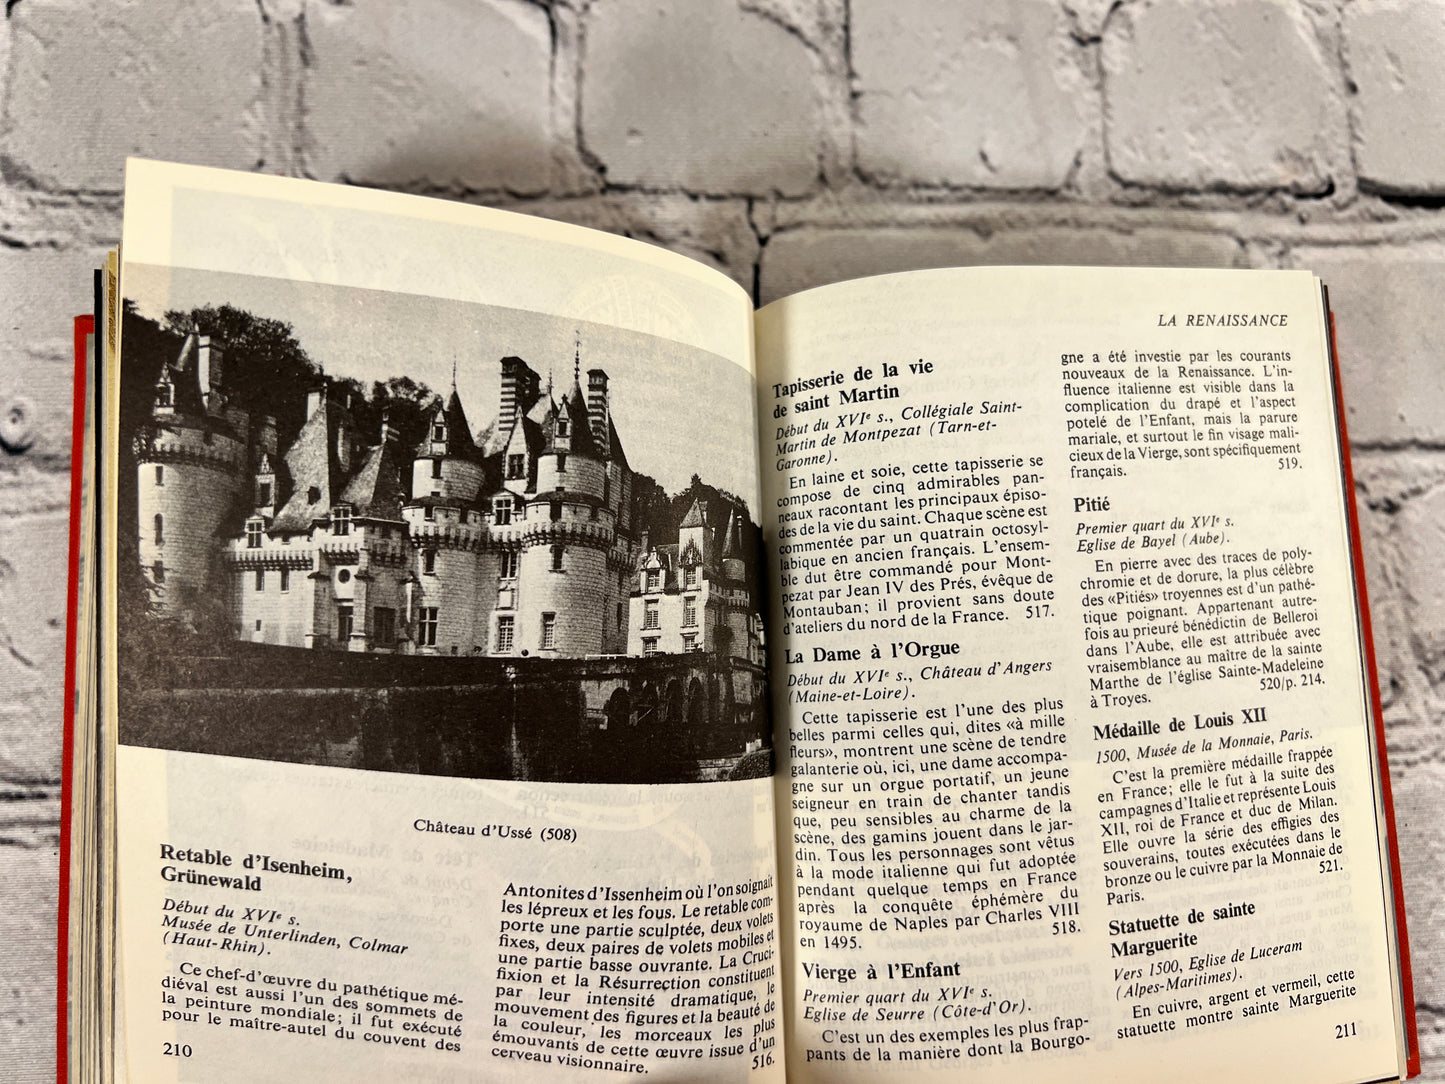 1000 Tresors de France (Treasures of) Encyclopedia de Poche [1966]